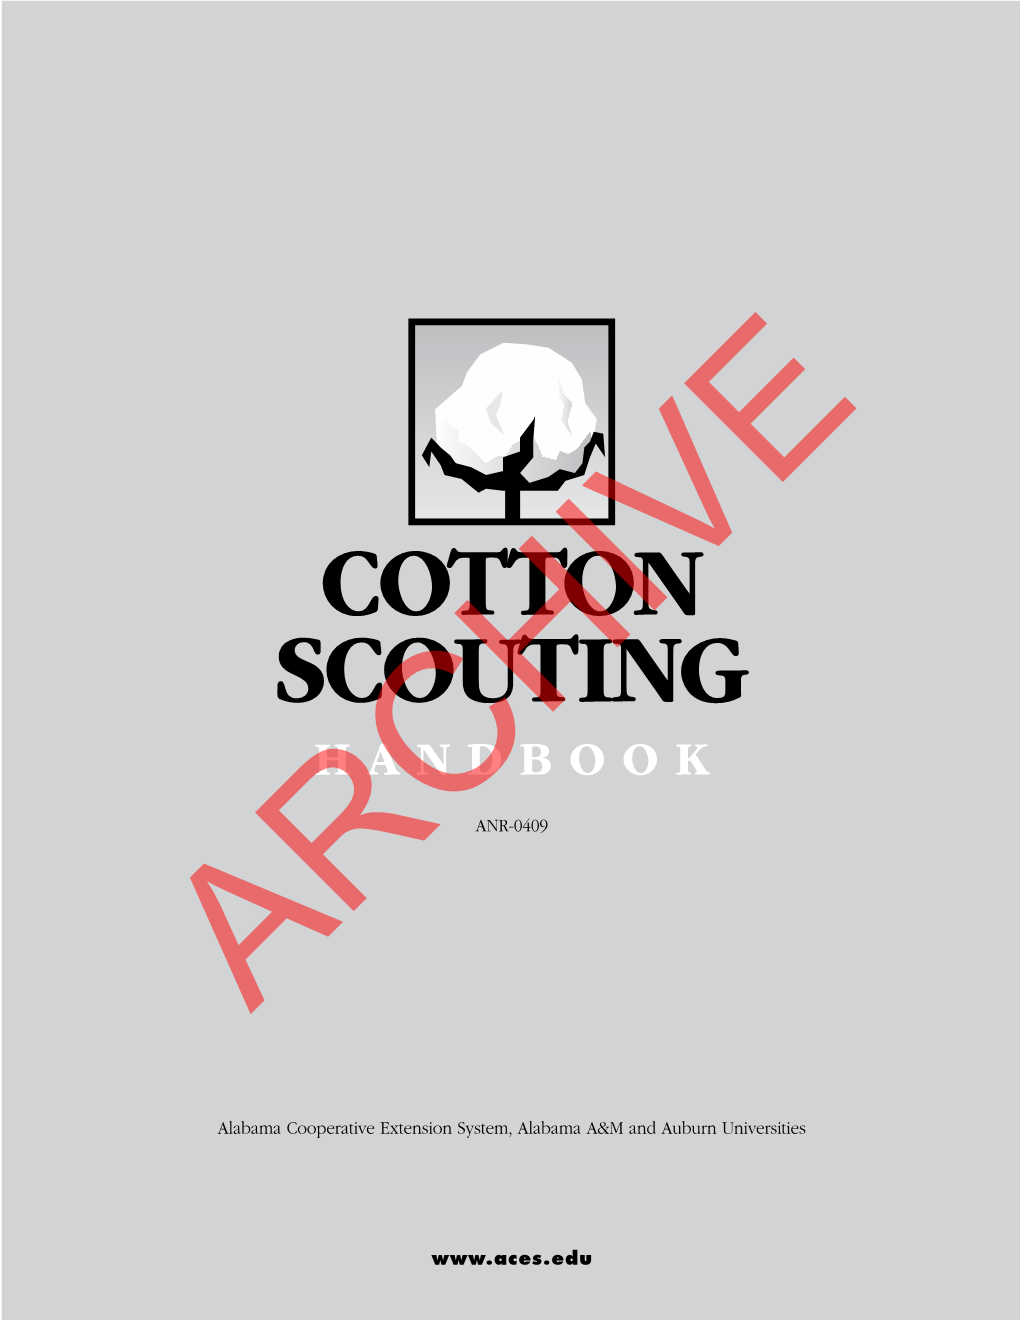 Cotton Scouting Handbook